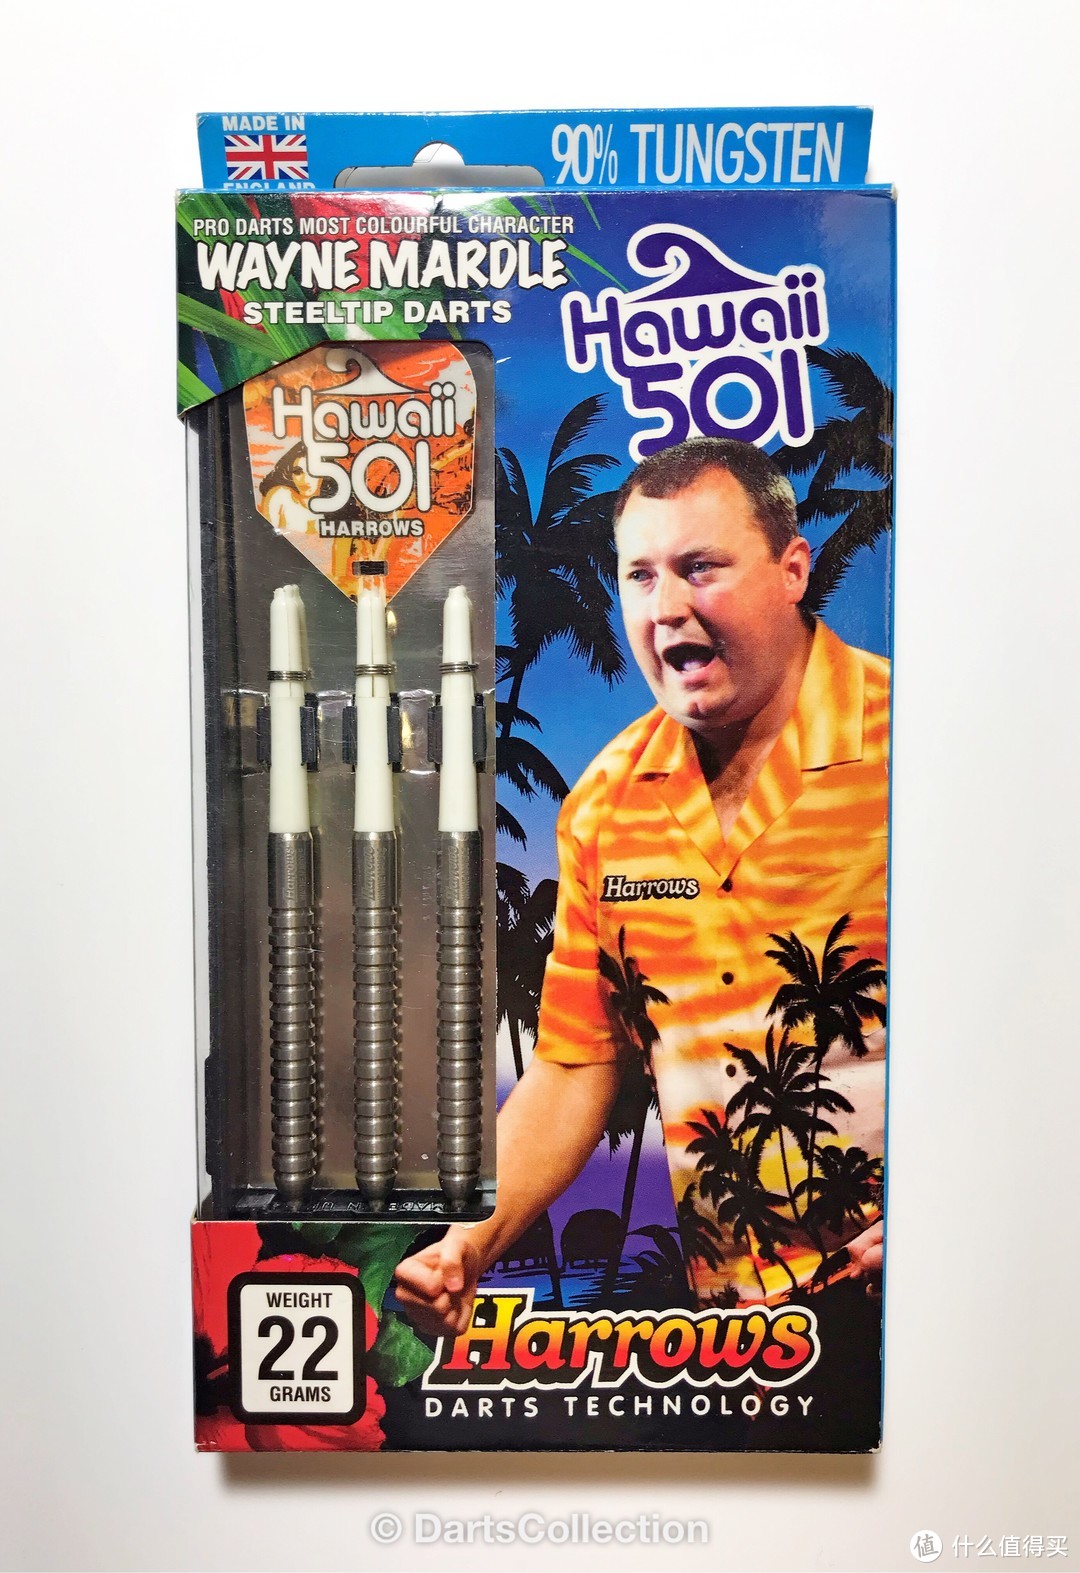 飞镖收藏开箱评测第十三期——Harrows Wayne Mardle Hawaii 501